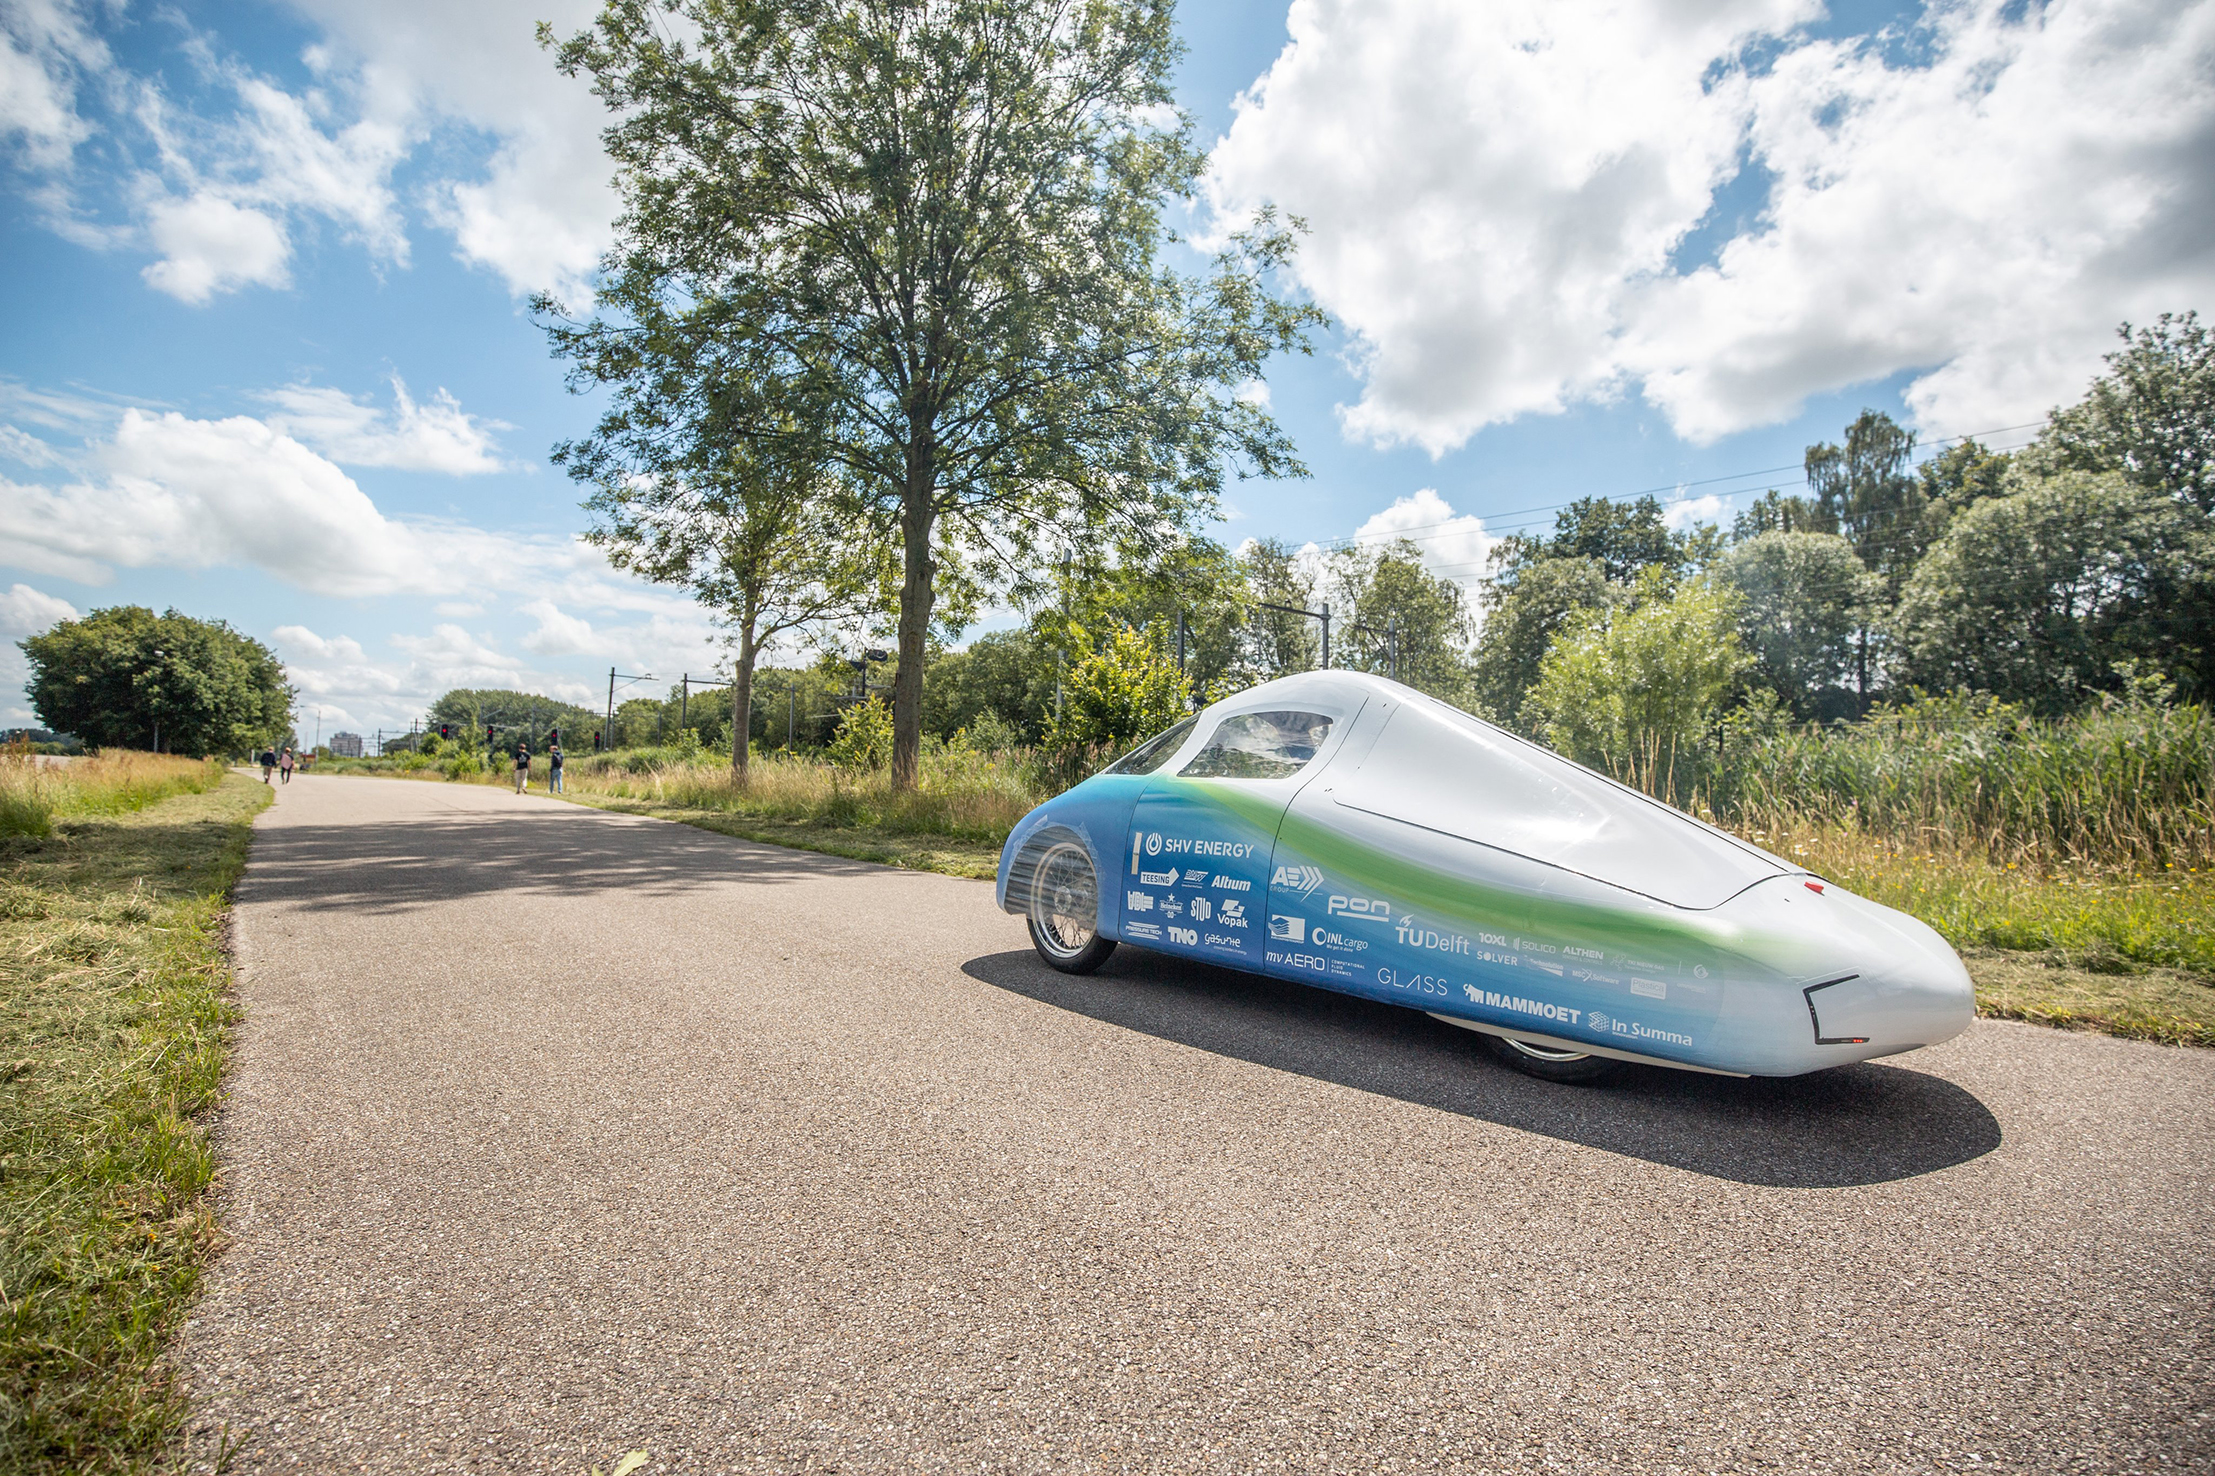 Eco-Runner Team Delft's latest vehicle